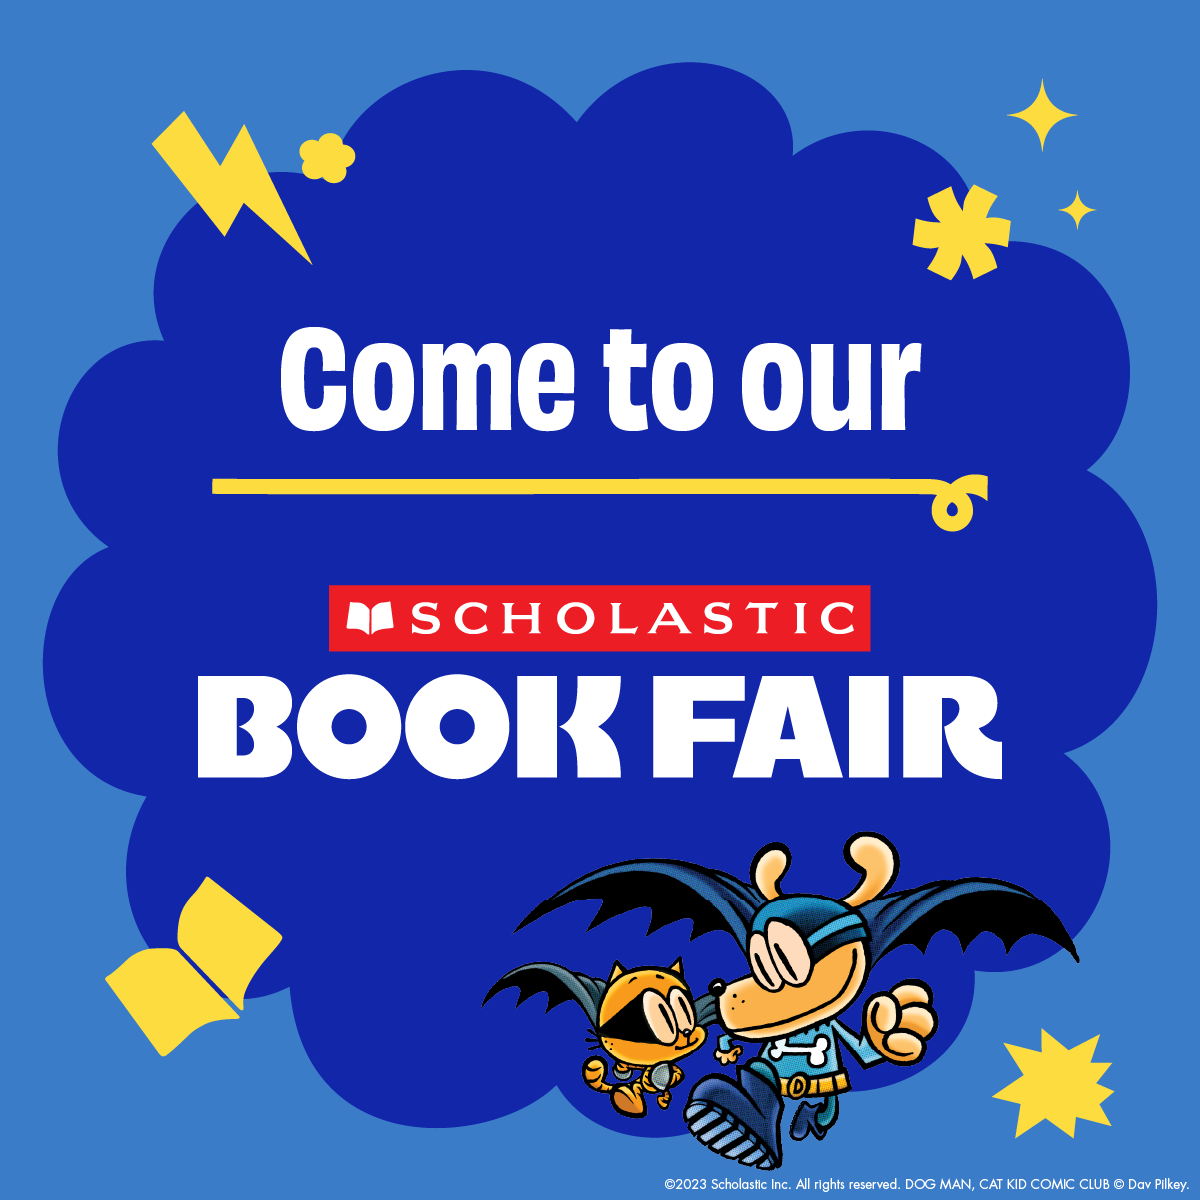 An Update on the Scholastic Book Fair! - Earhart School PTA